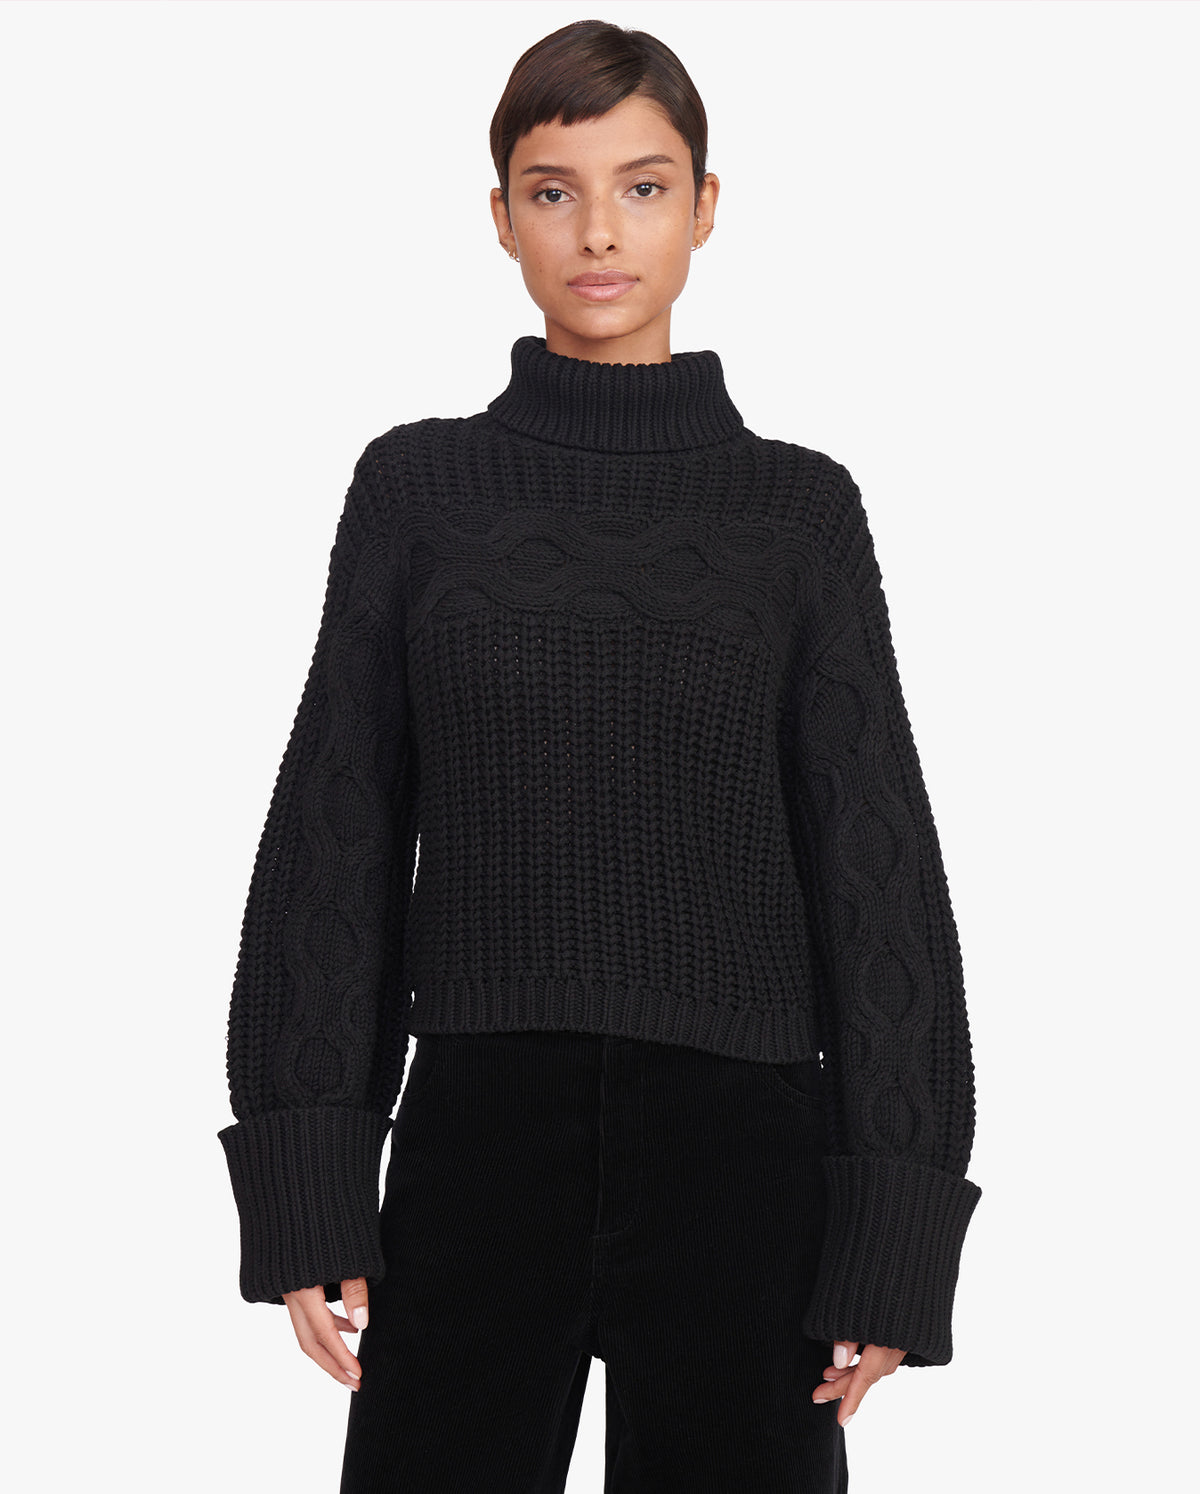 Vernacular Sweater - Black